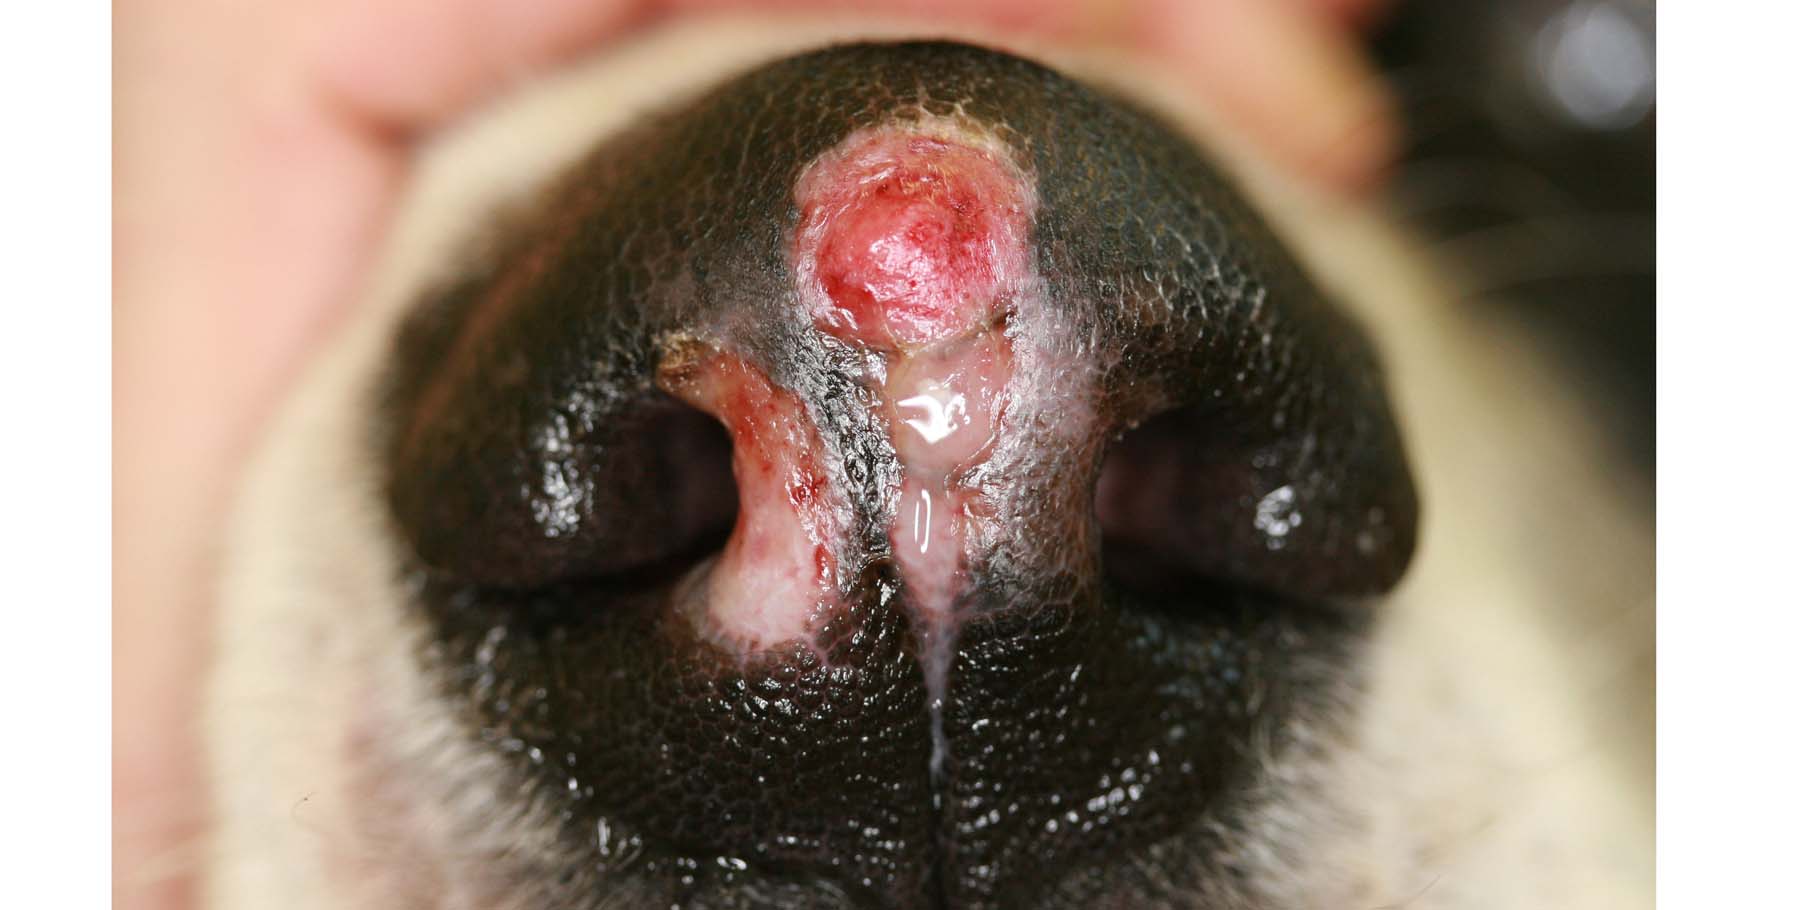 Advanced Nasal Squamous Cell Carcinoma, Bassett Hound